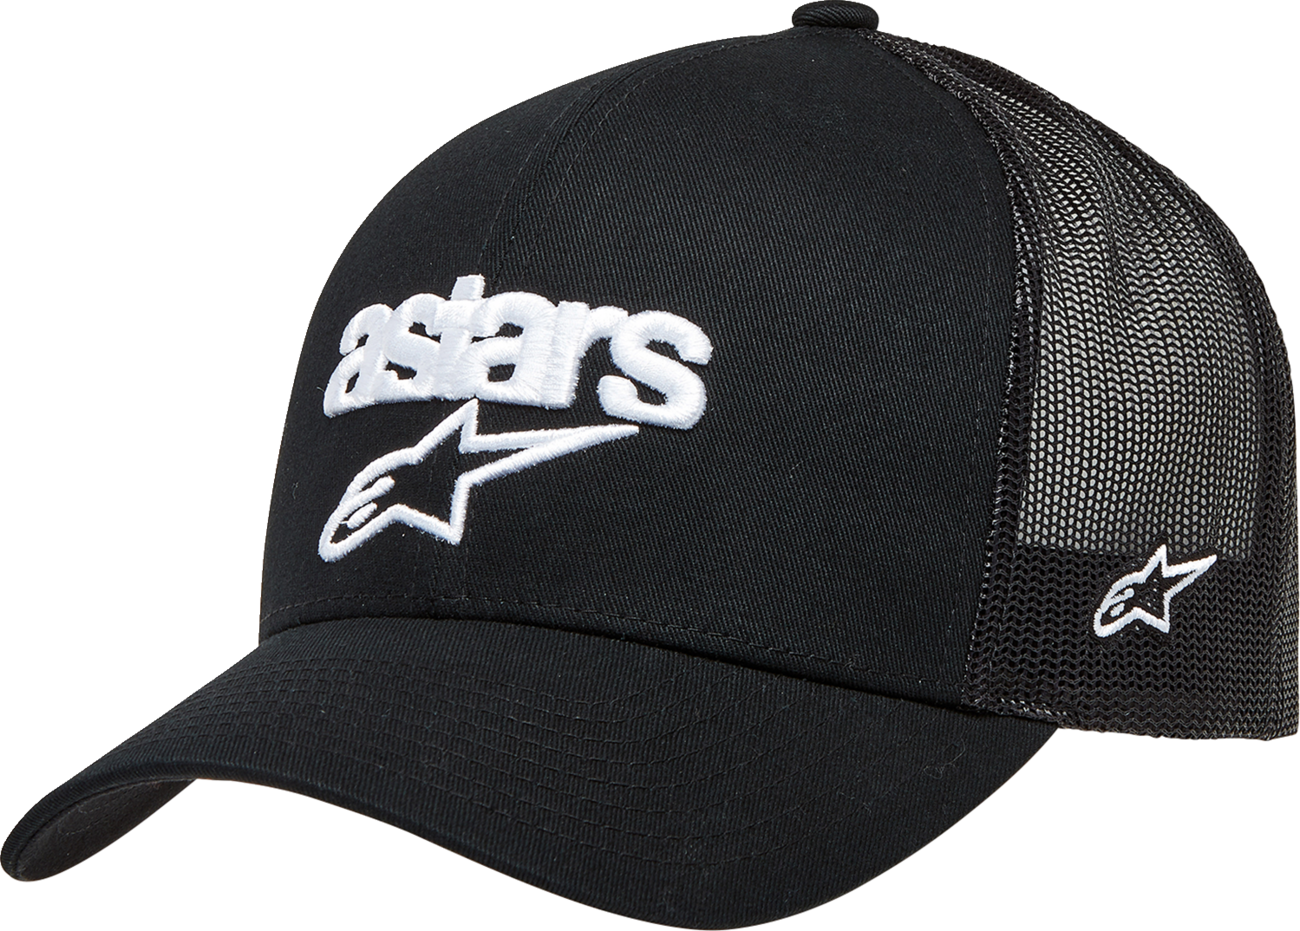 ALPINESTARS Pedigree Hat - Black/White - One Size 1232-81040-1020